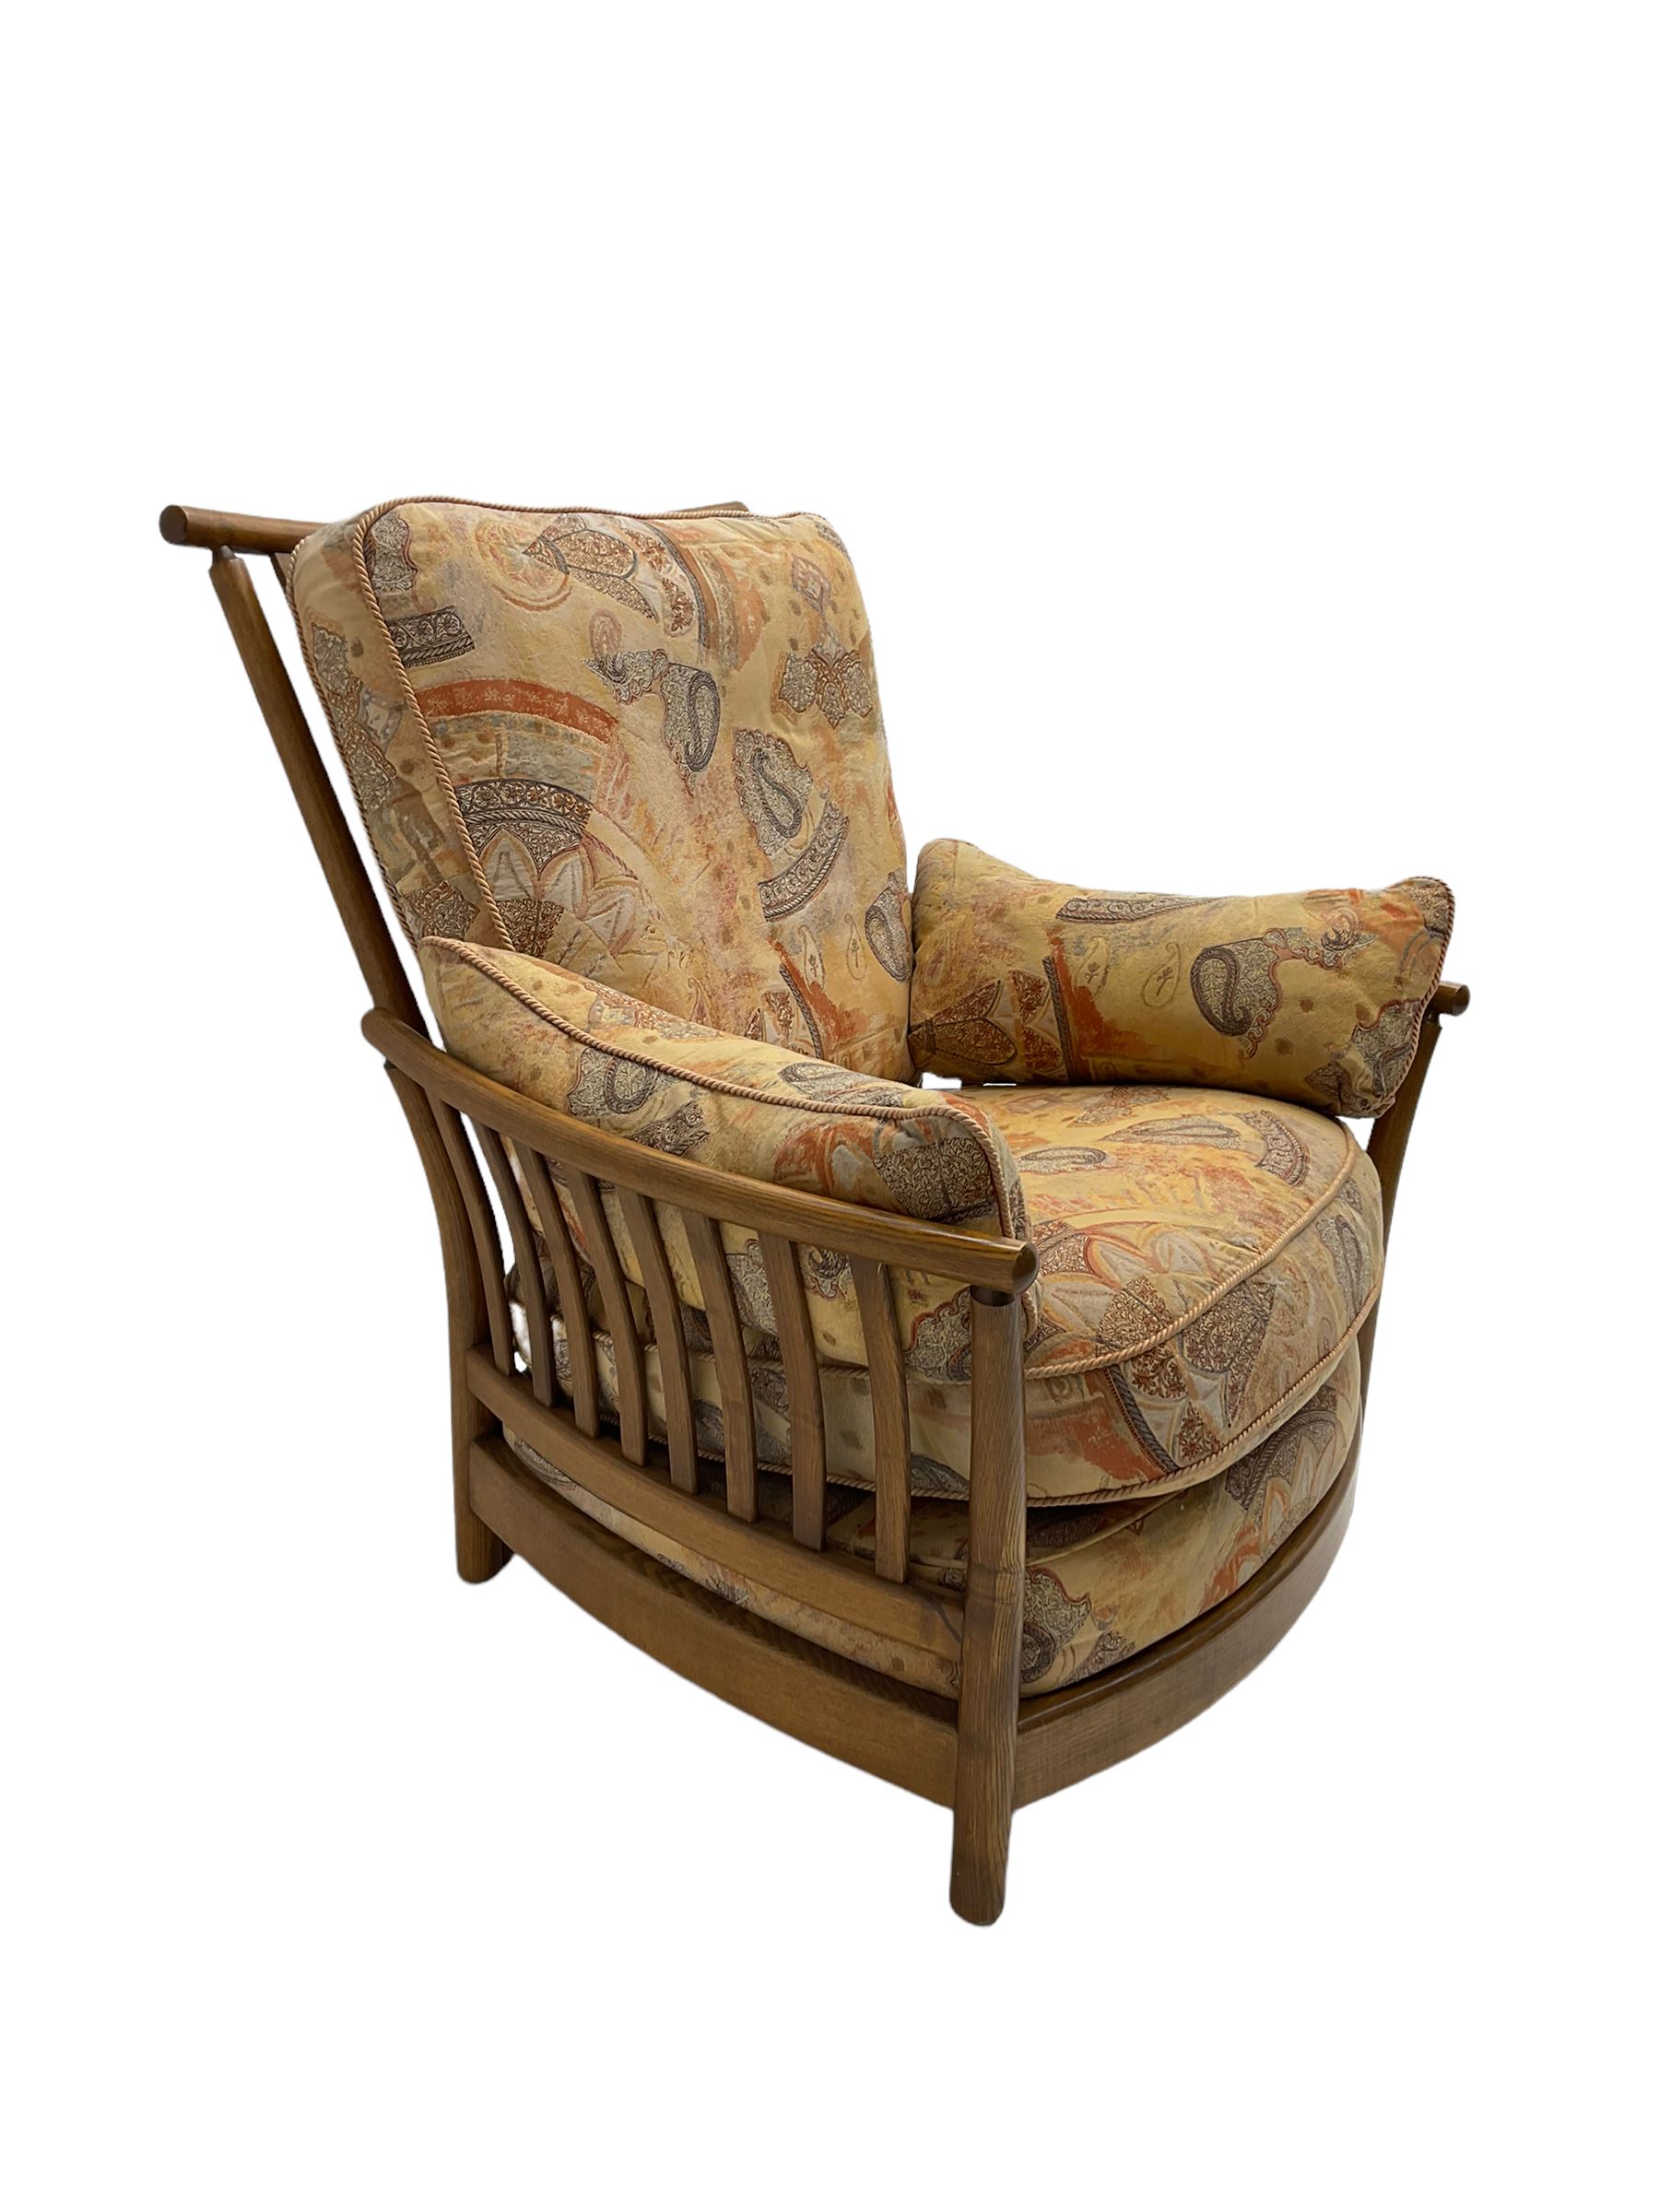 Ercol - 'Renaissance' armchair - Image 3 of 6